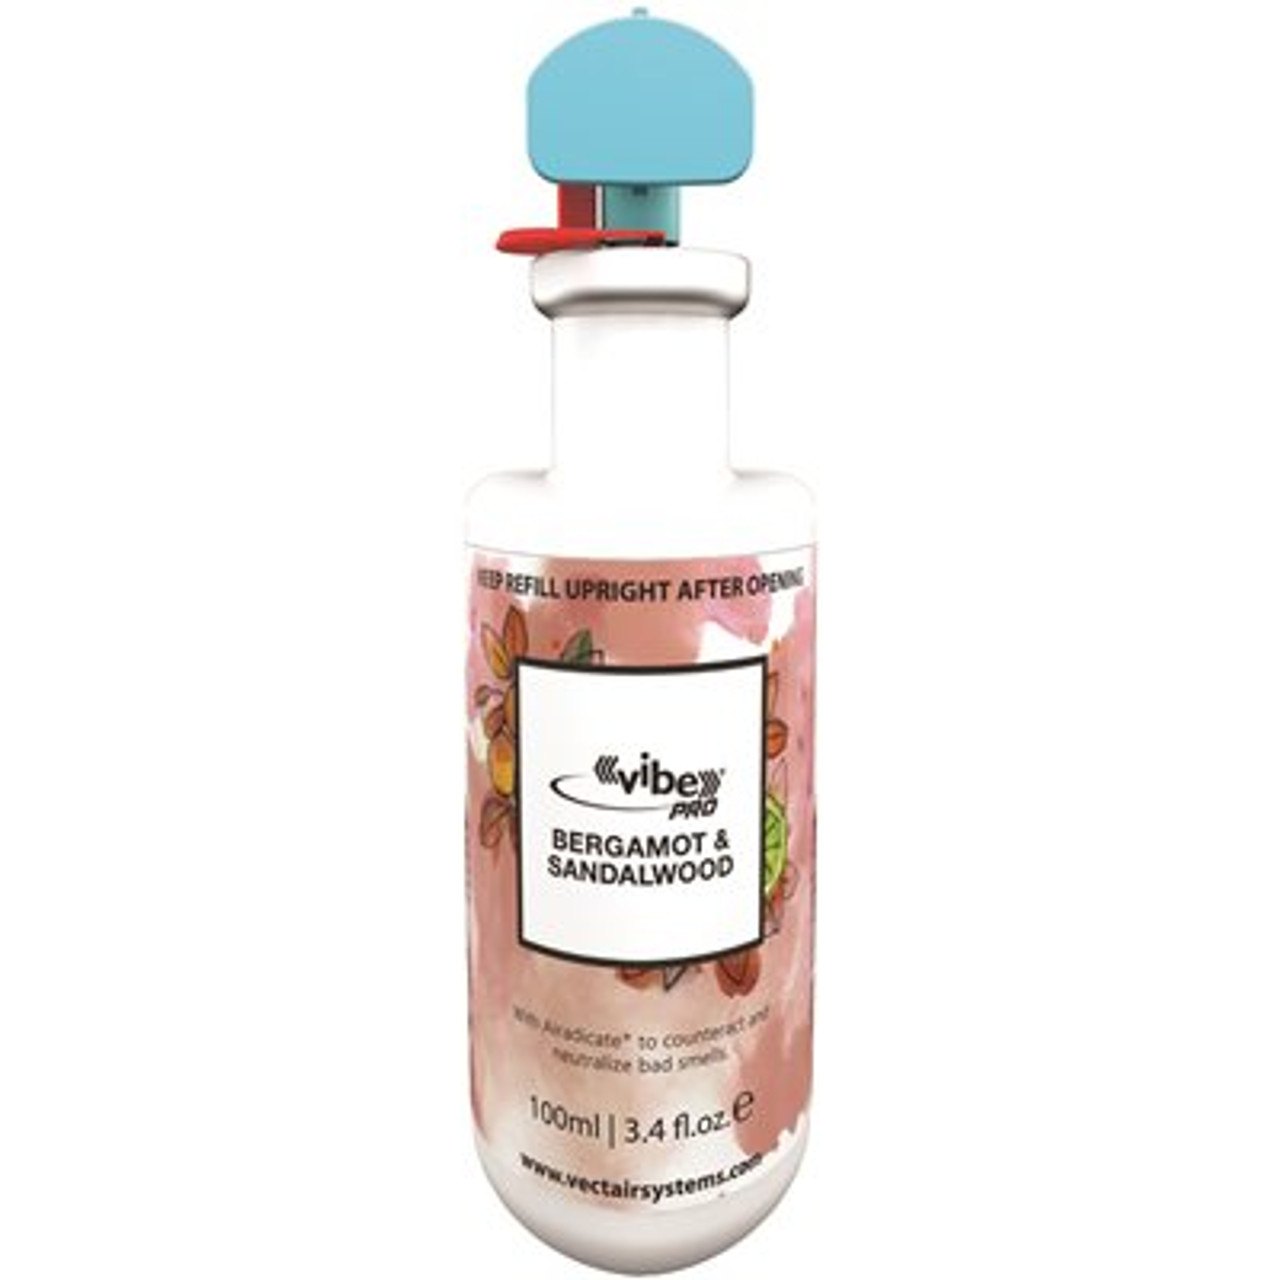 VECTAIR Vibe Pro Fragrance Air Deodorize Bergamot/sandalwood Case Of 4